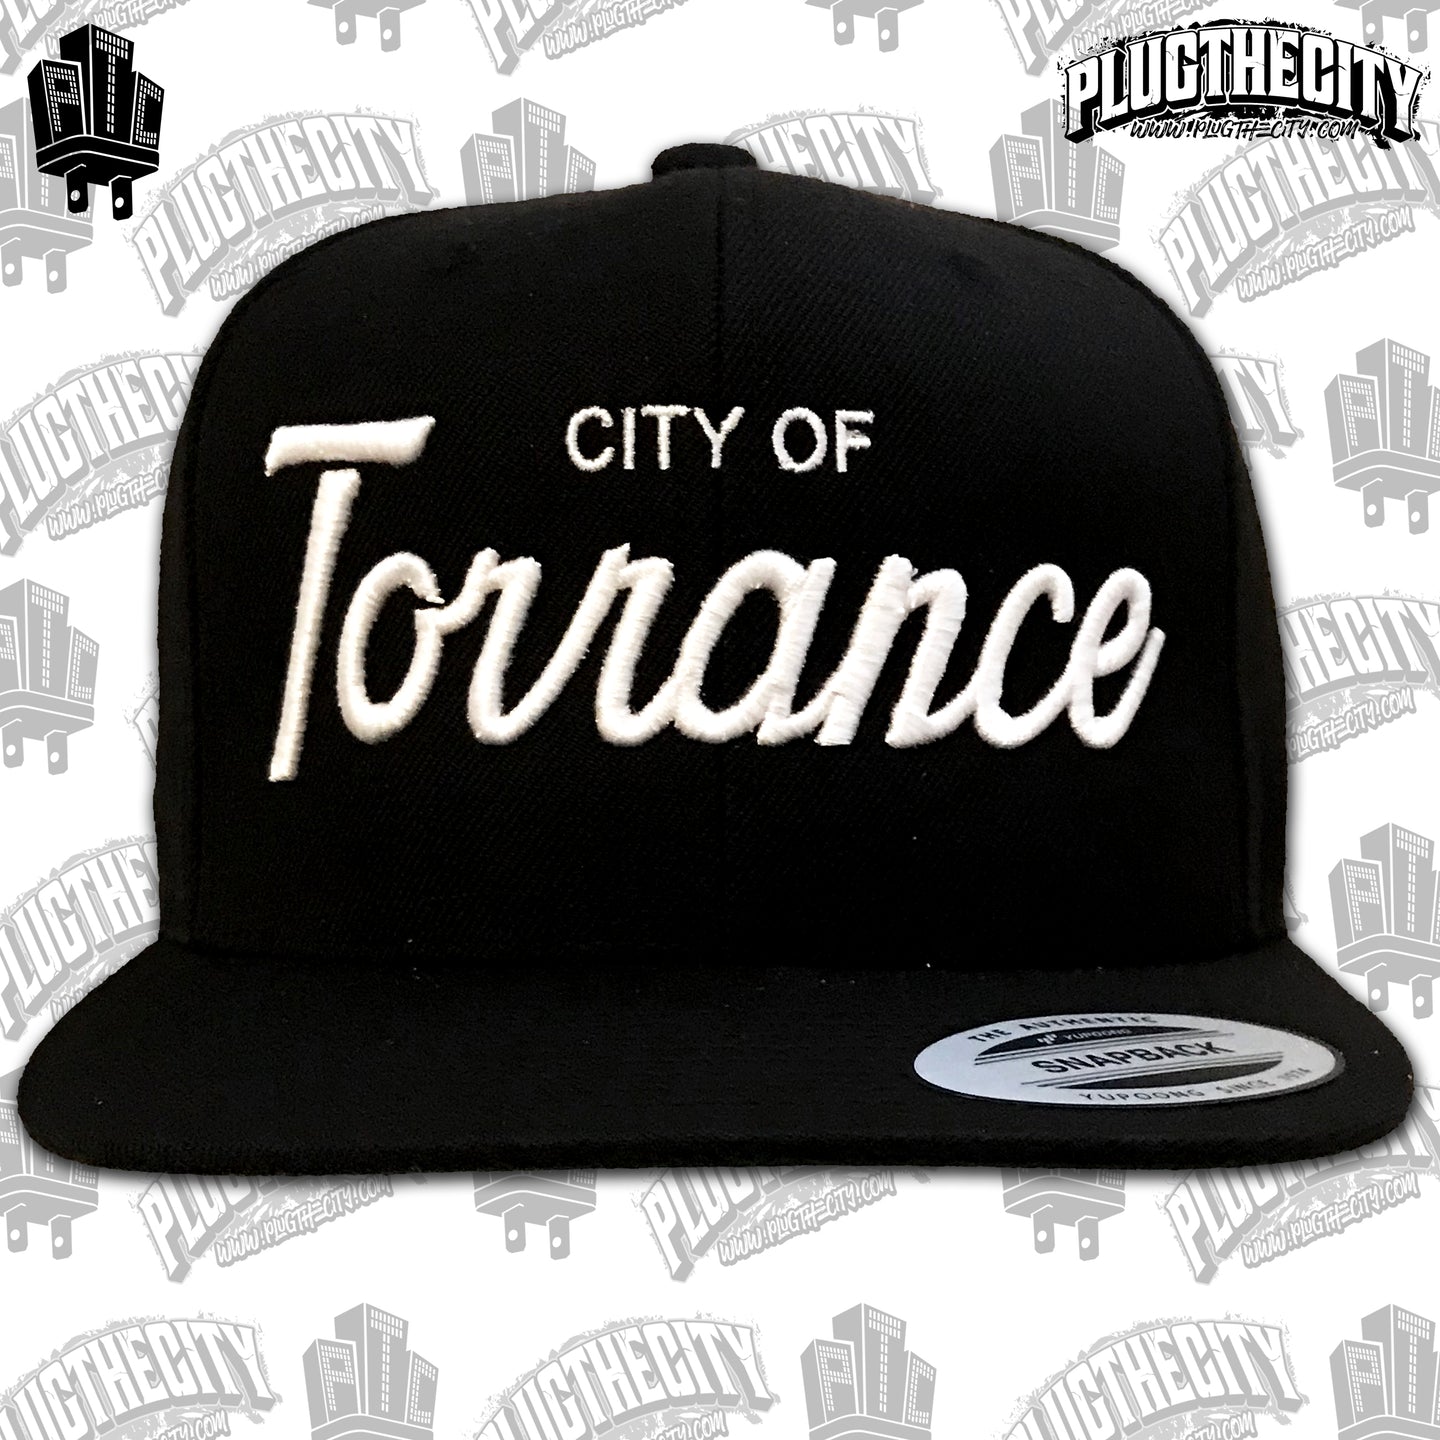 Torrance-City of Torrance-110 & PTC on the side of snapback baseball hat-Color:Black